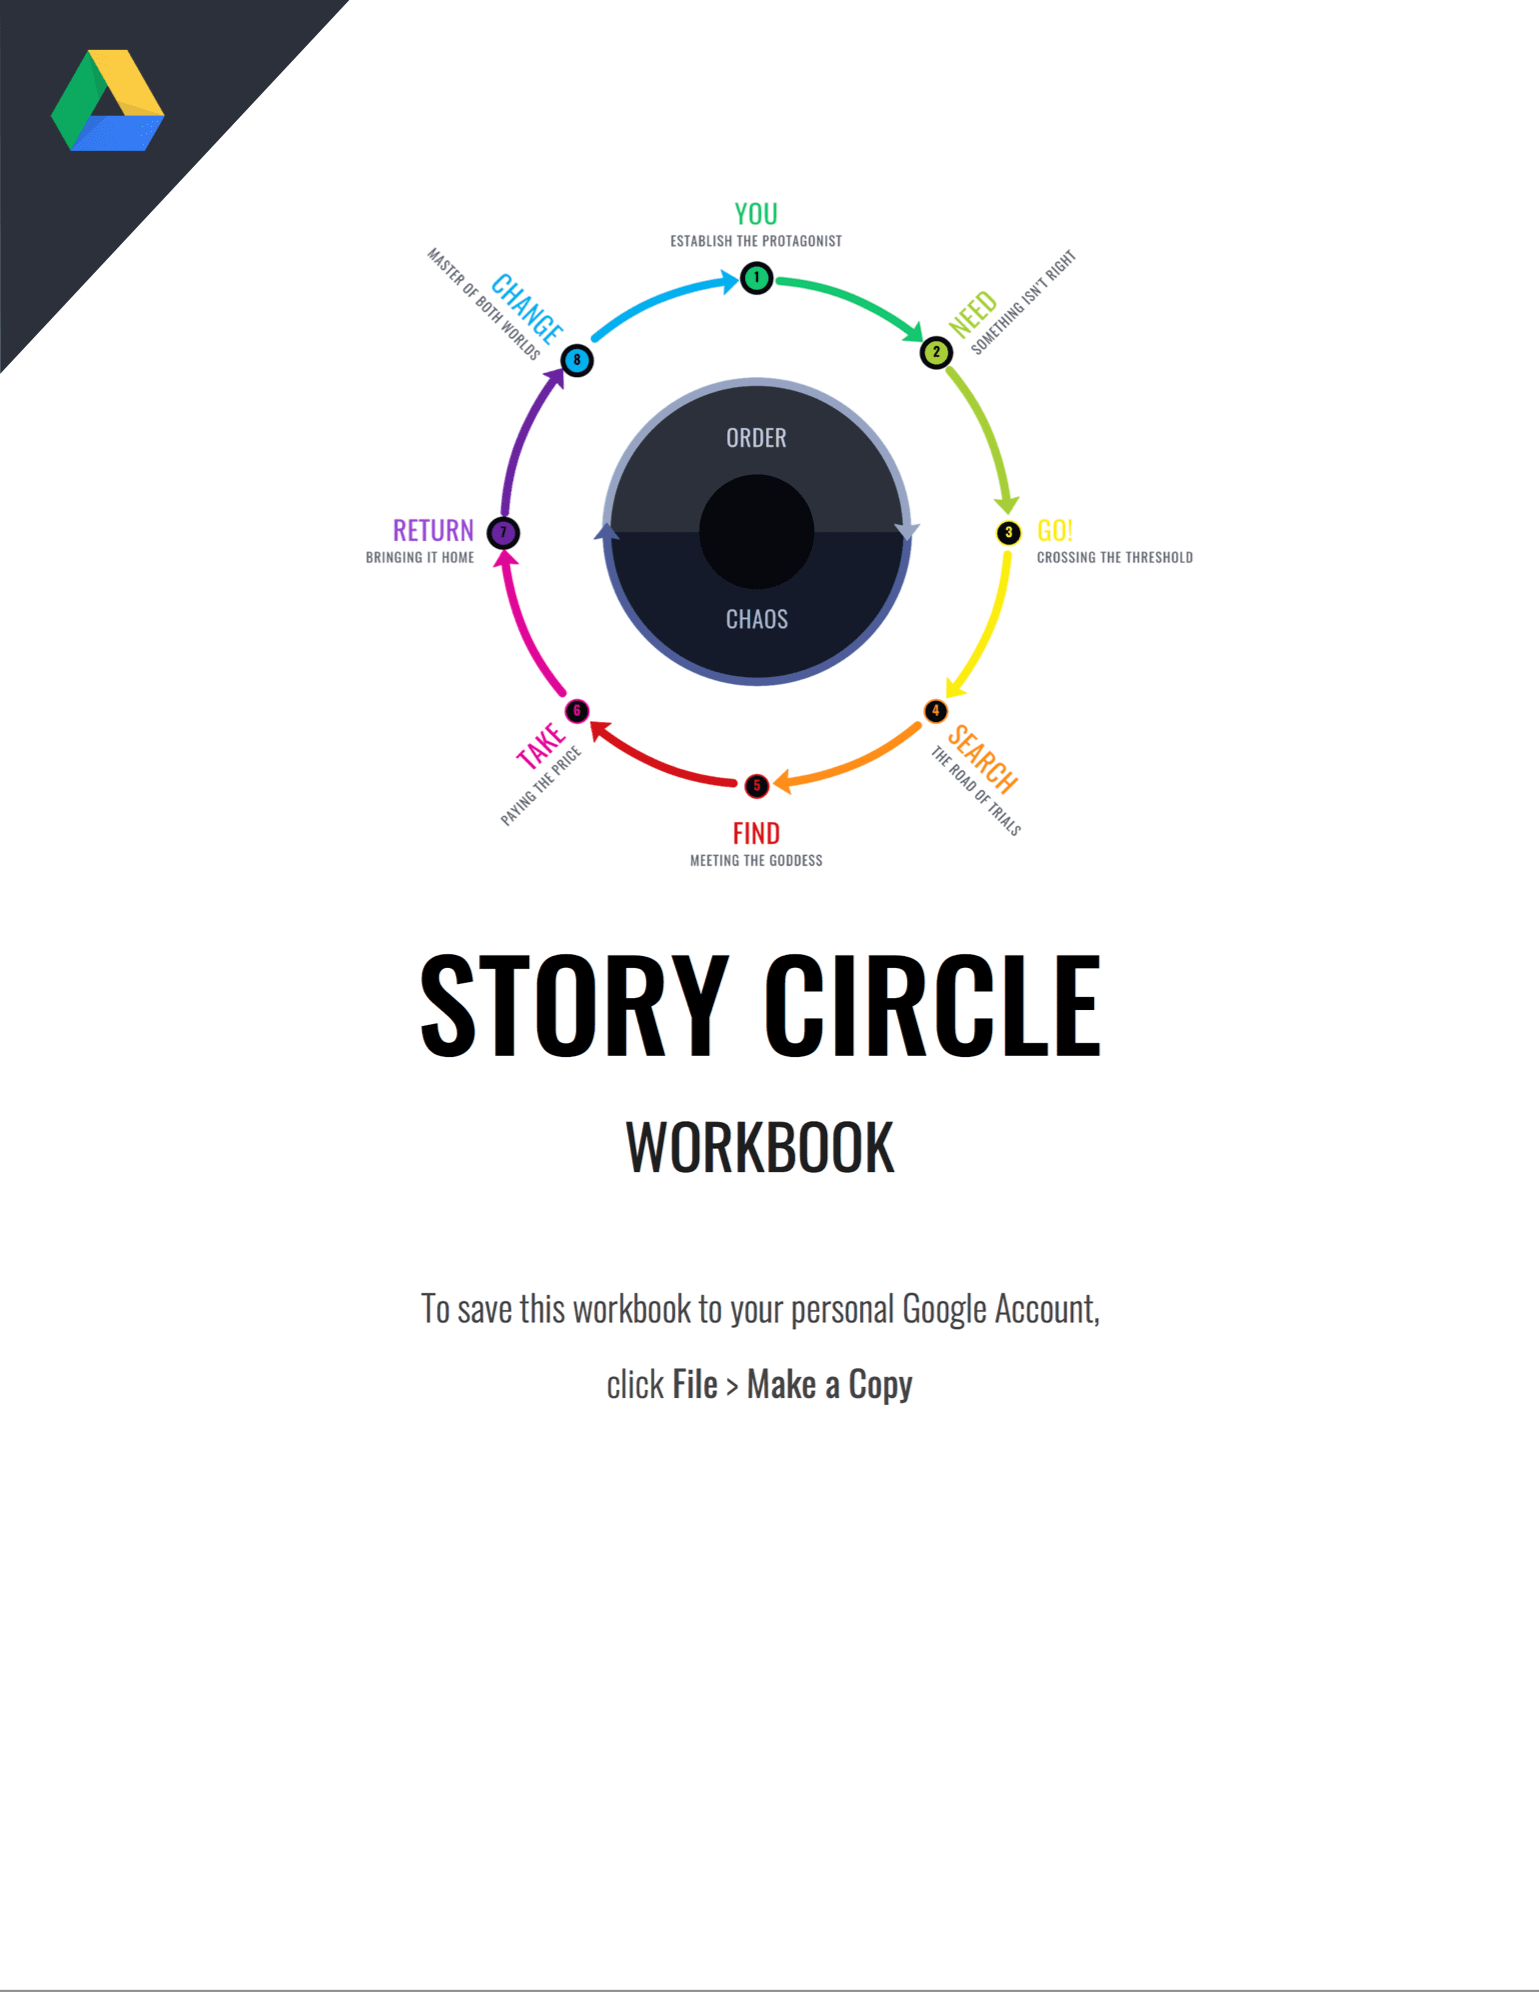 Story Circle Google Drive Worksheet v2 - StudioBinder